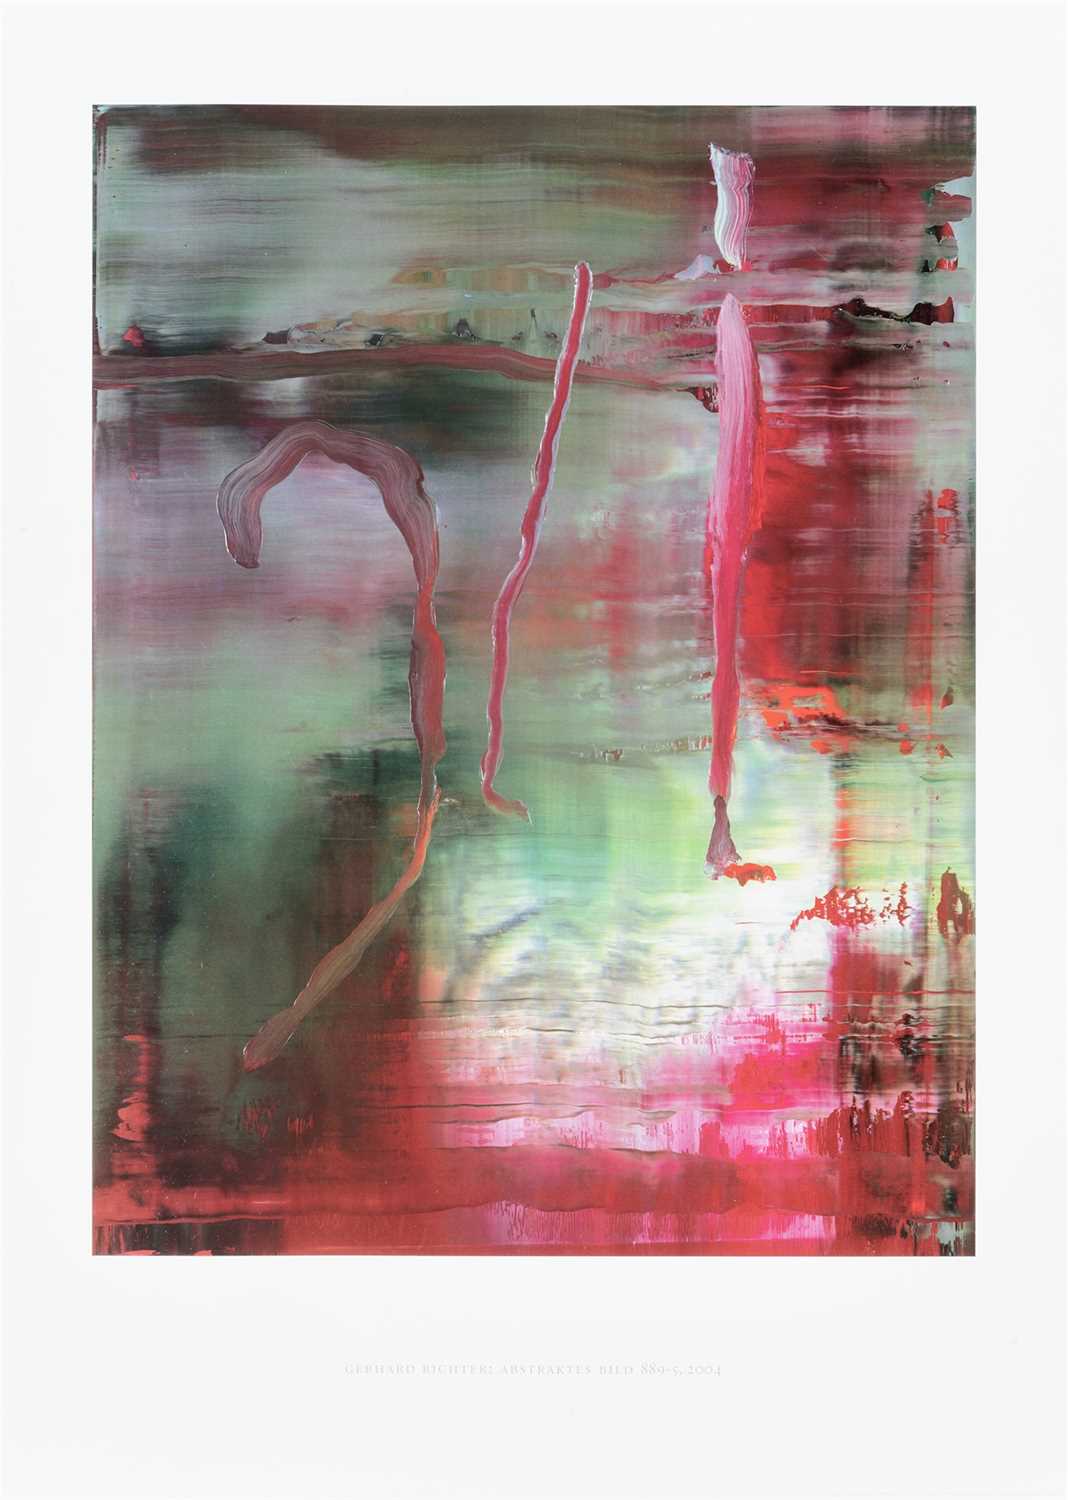 Lot 32 - Gerhard Richter (German b.1932), 'Abstraktes Bild 889-5 (Abstract Picture)', 2004